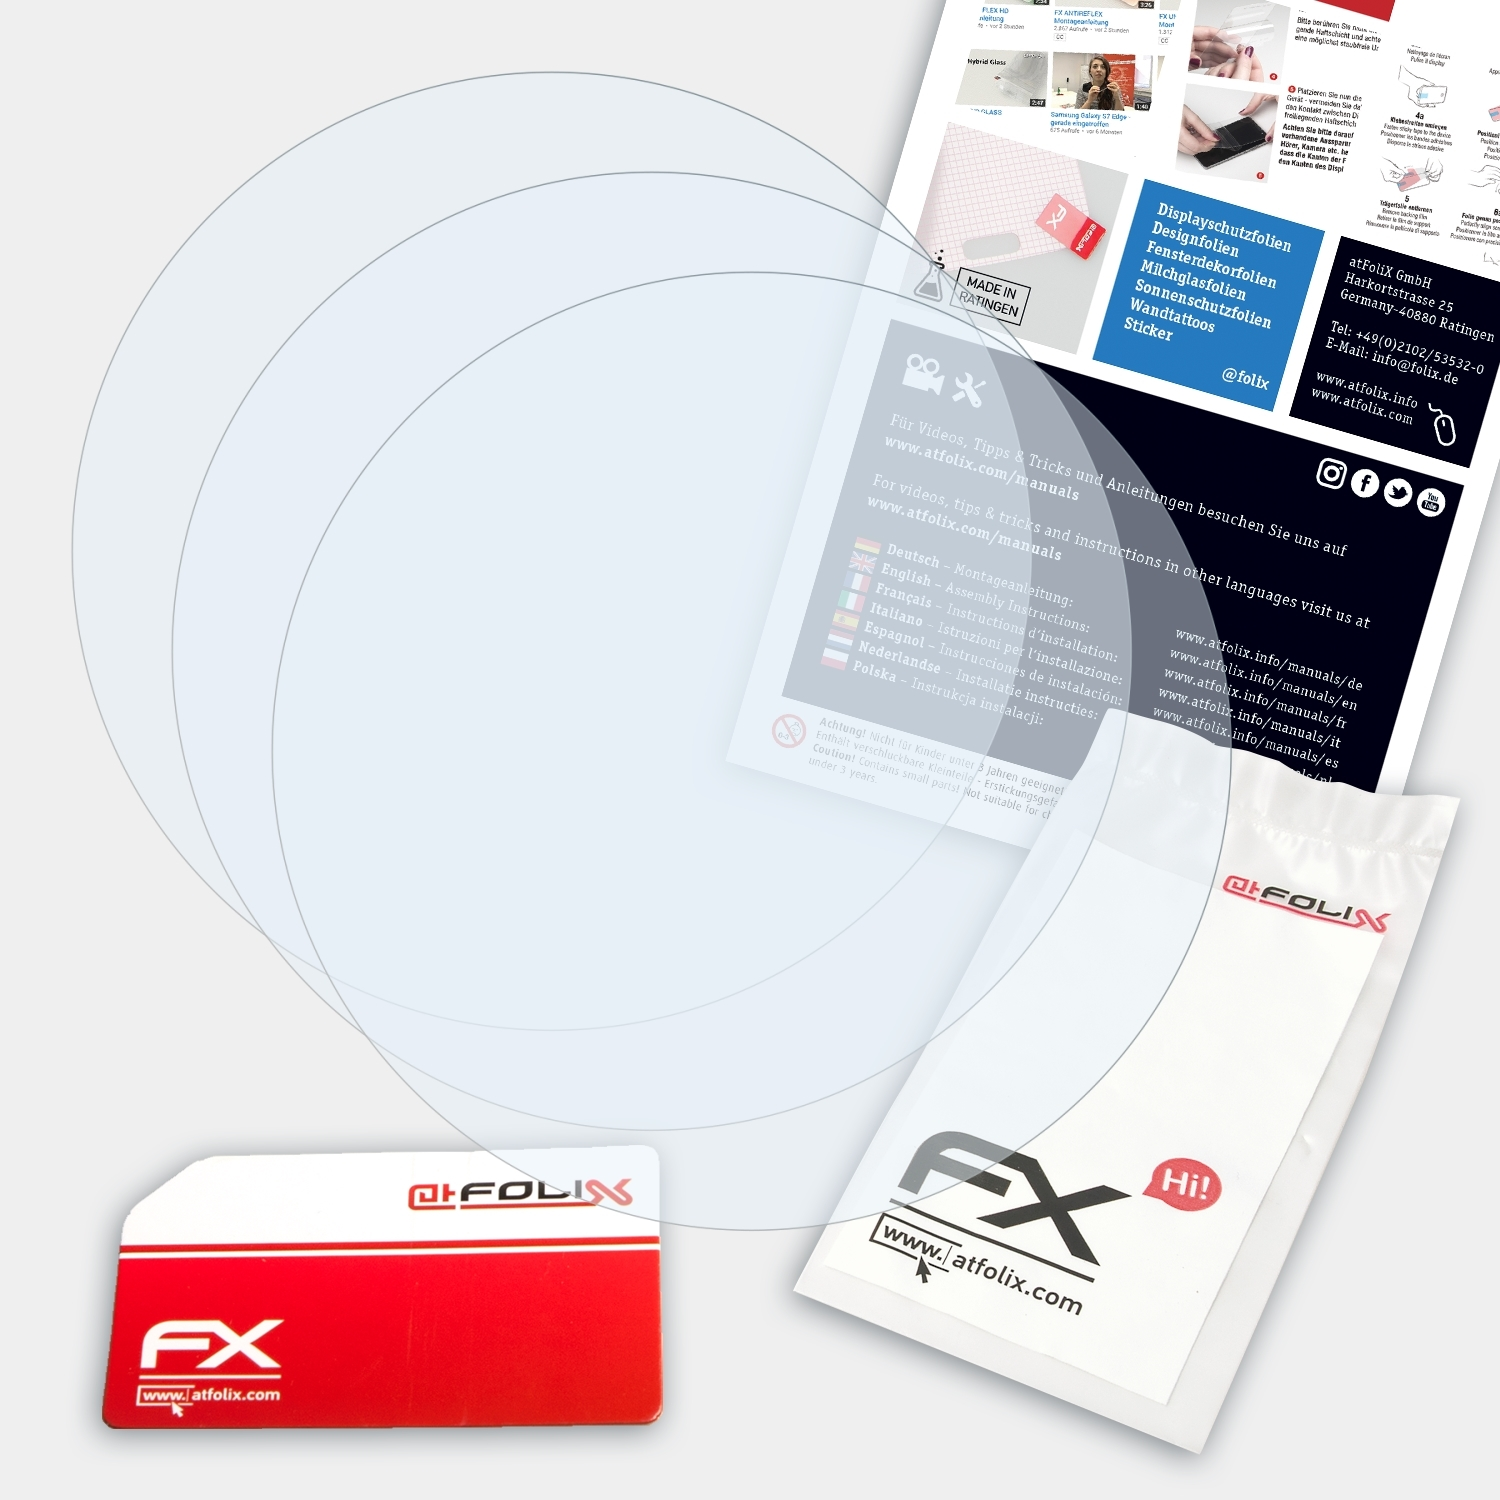 ATFOLIX 3x FX-Clear Displayschutz(für Fossil Q Marshal)